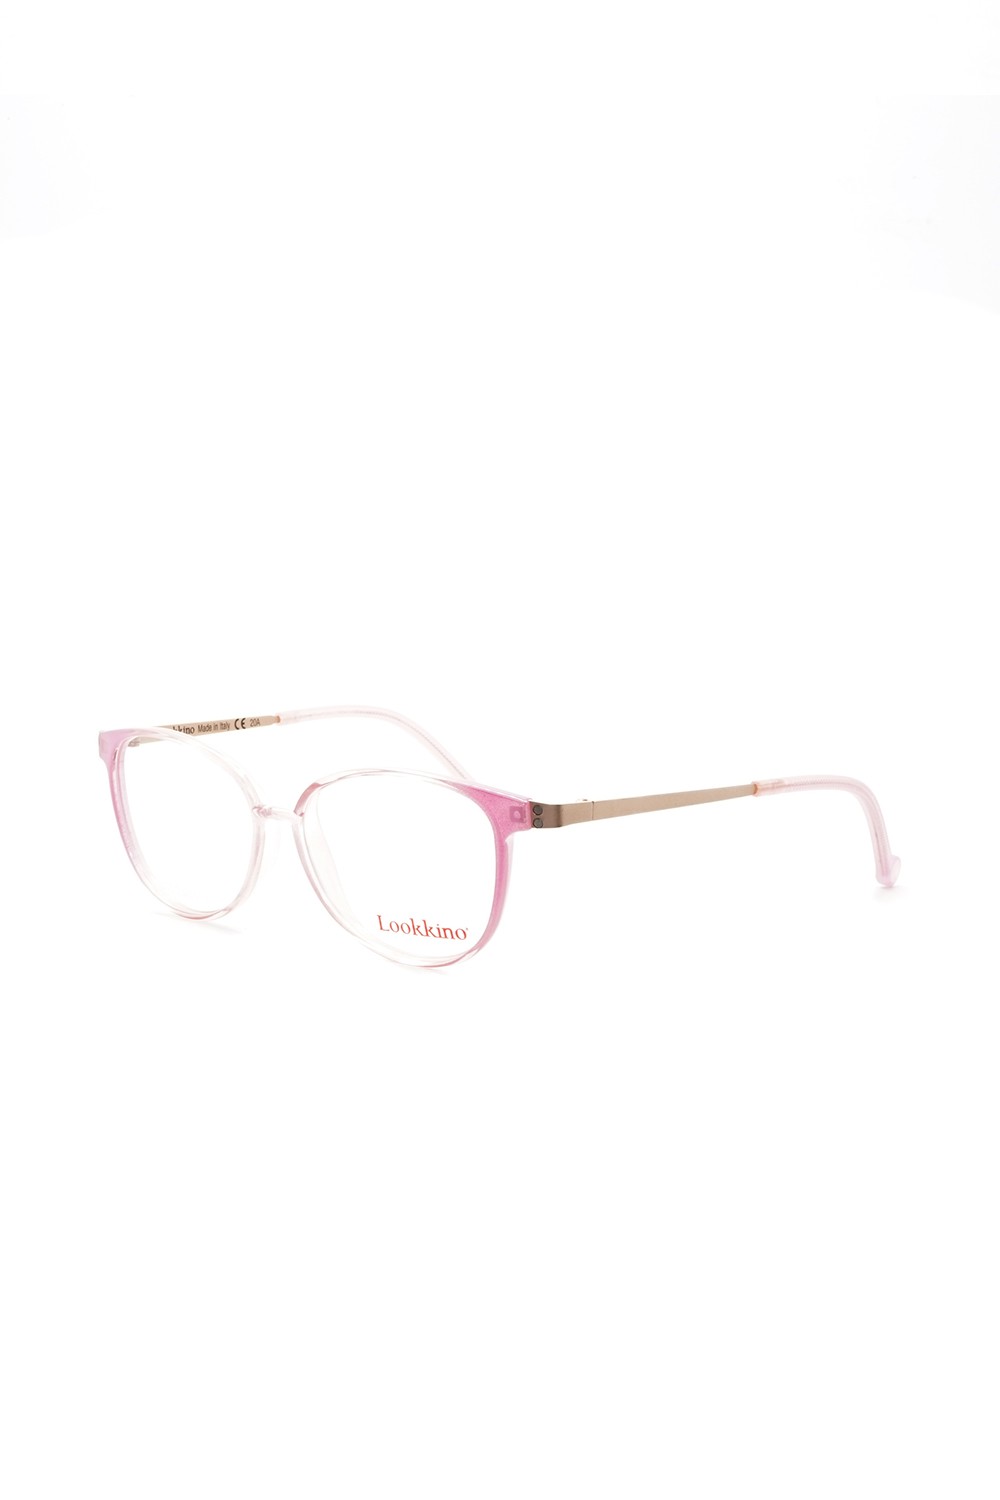 Lookkino - Occhiali da vista in plastica cat eye per bambina rosa - 3851 W1